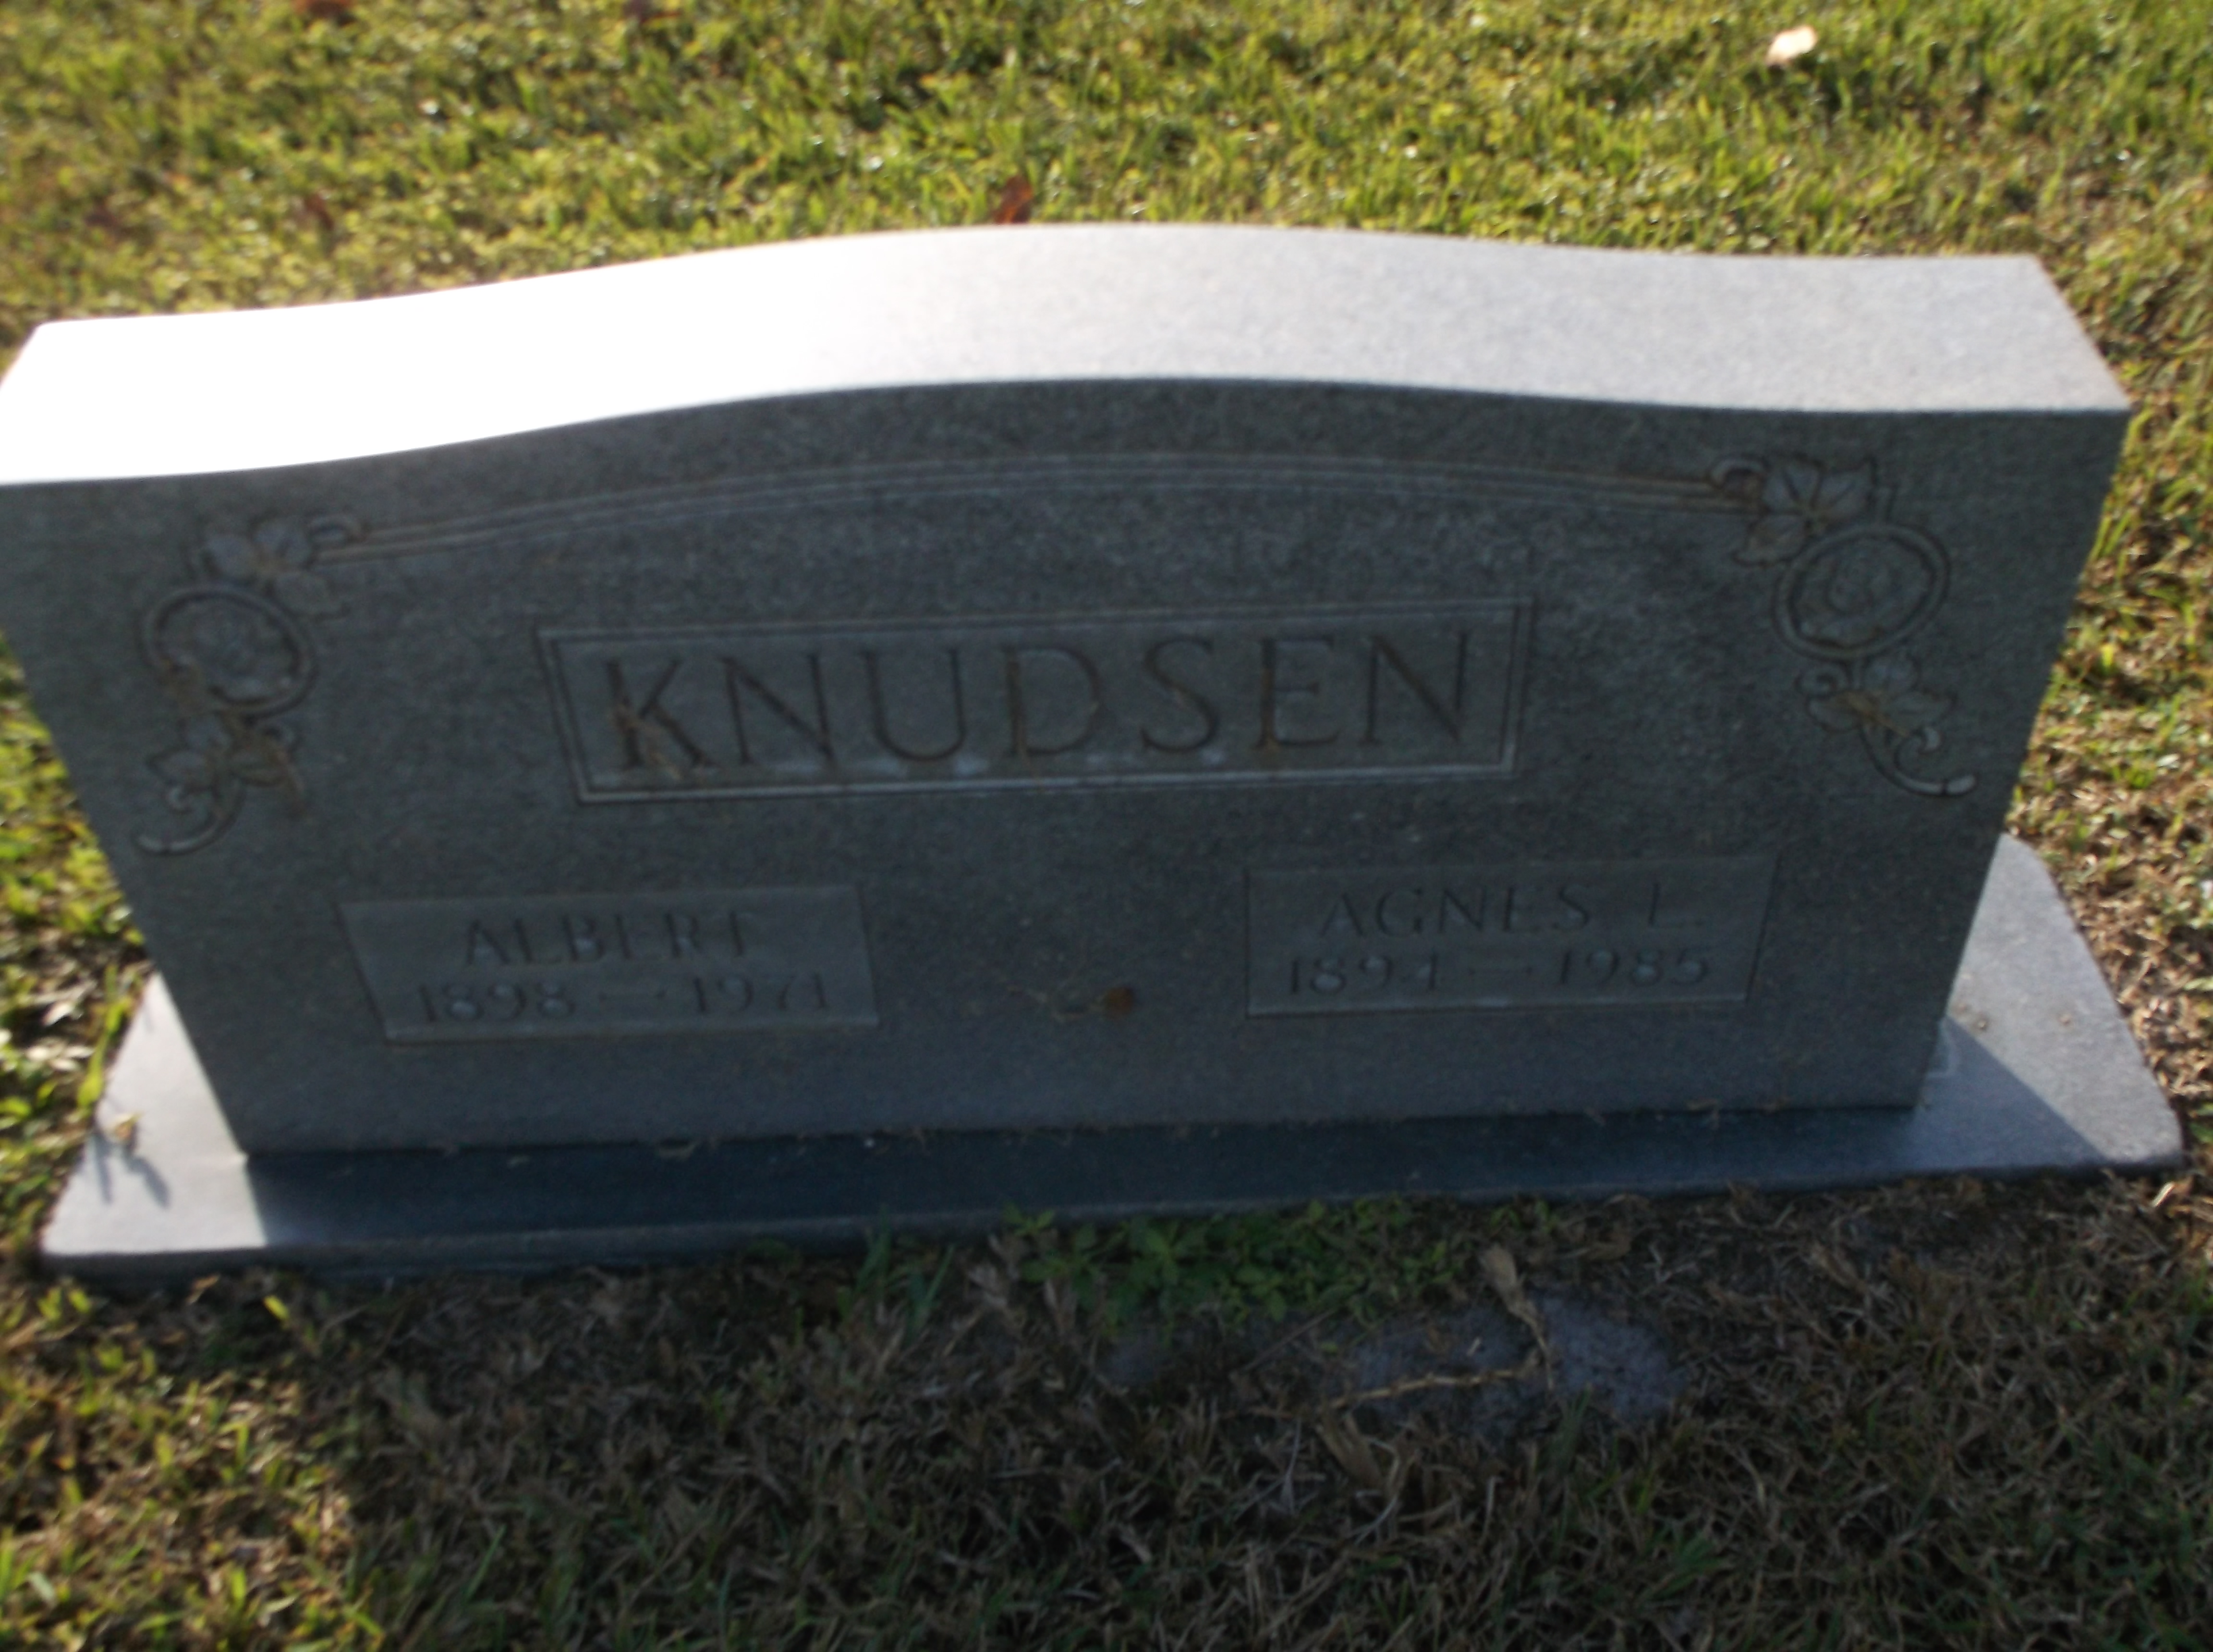 Albert Knudsen